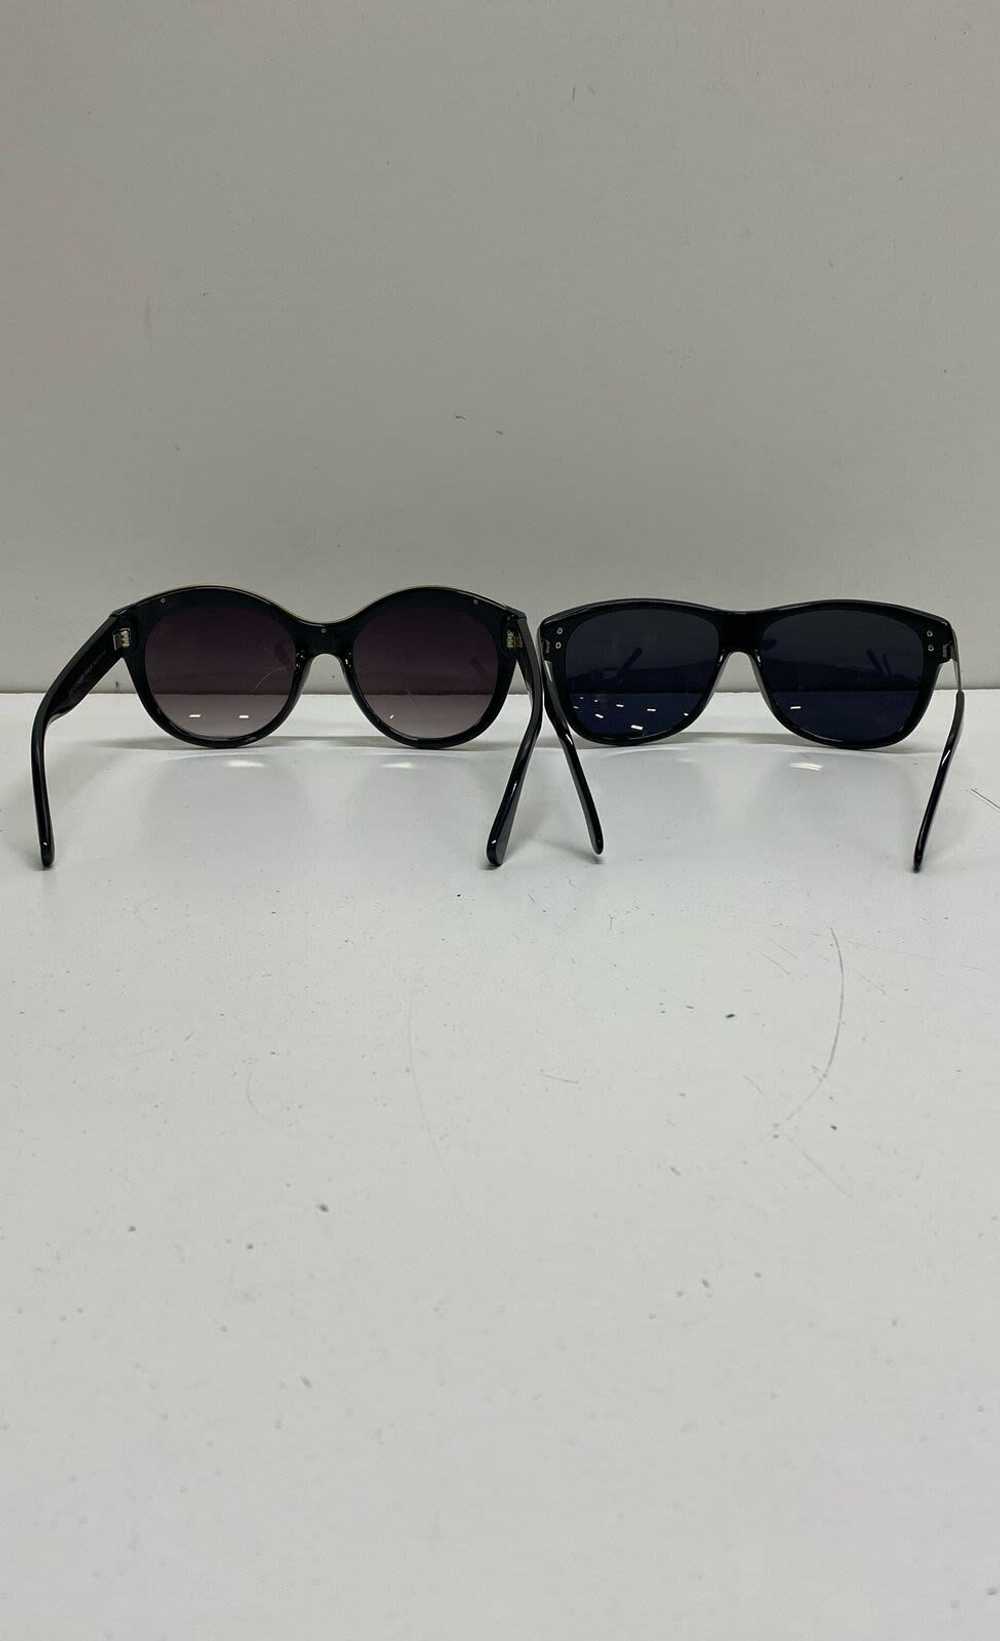 Unbranded Black Sunglasses - 2 Pairs No Case - image 3